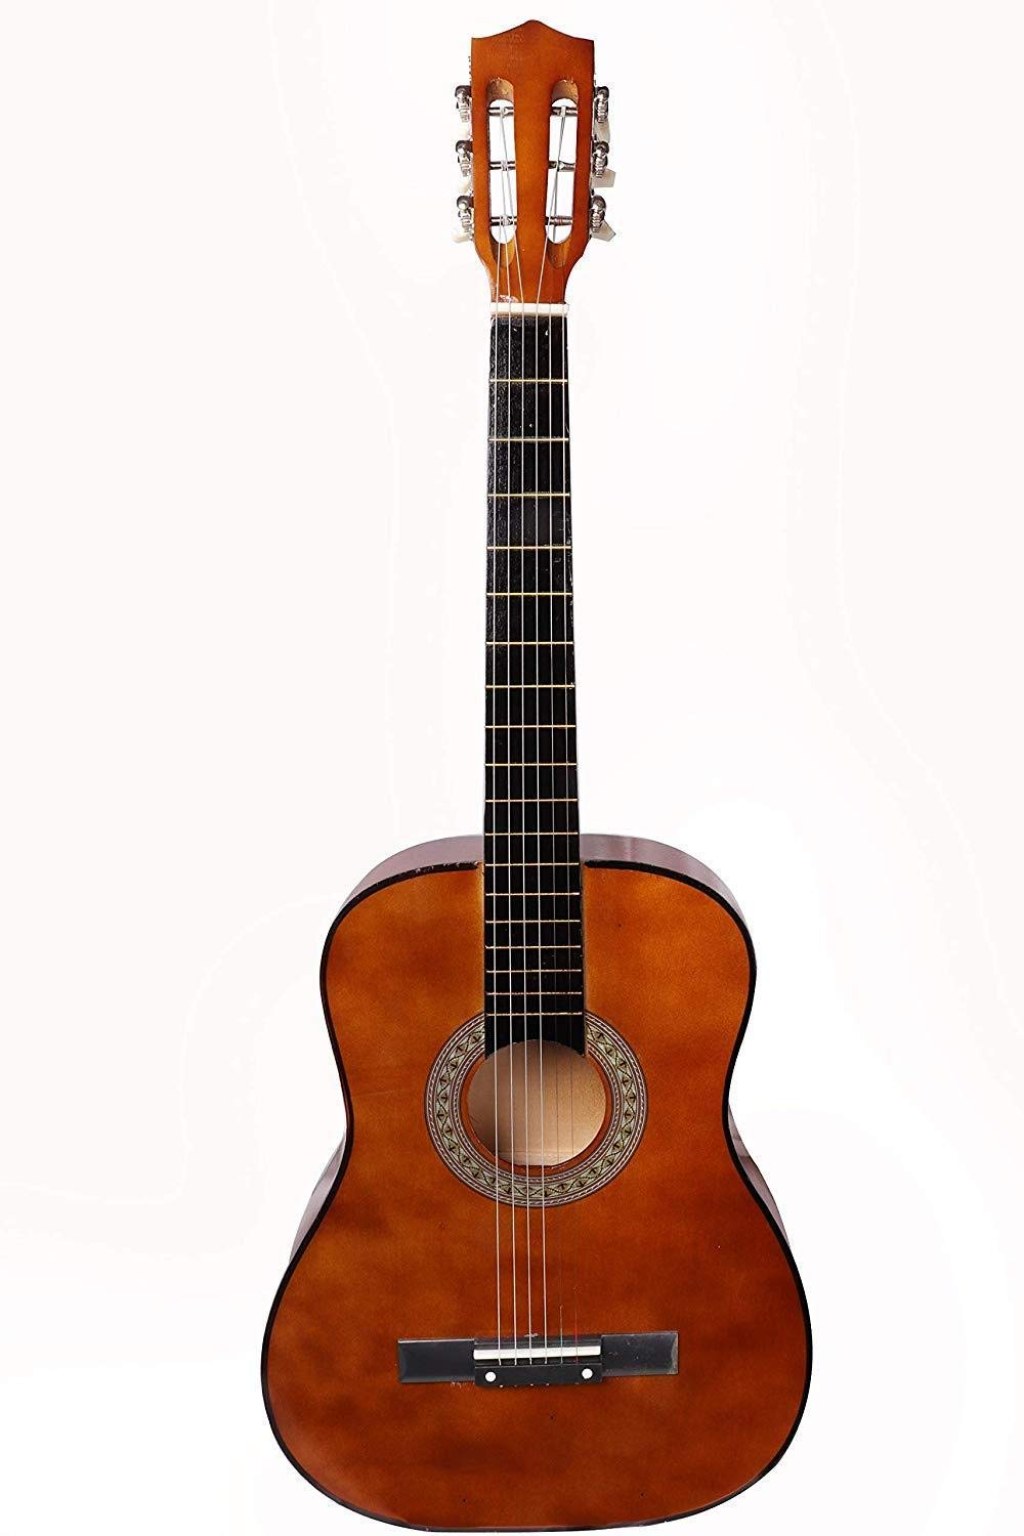 lifestyle x guitar - Buy YATRIK LIFESTYLE Acoustic Guitar,  Inch Cutaway, Strings